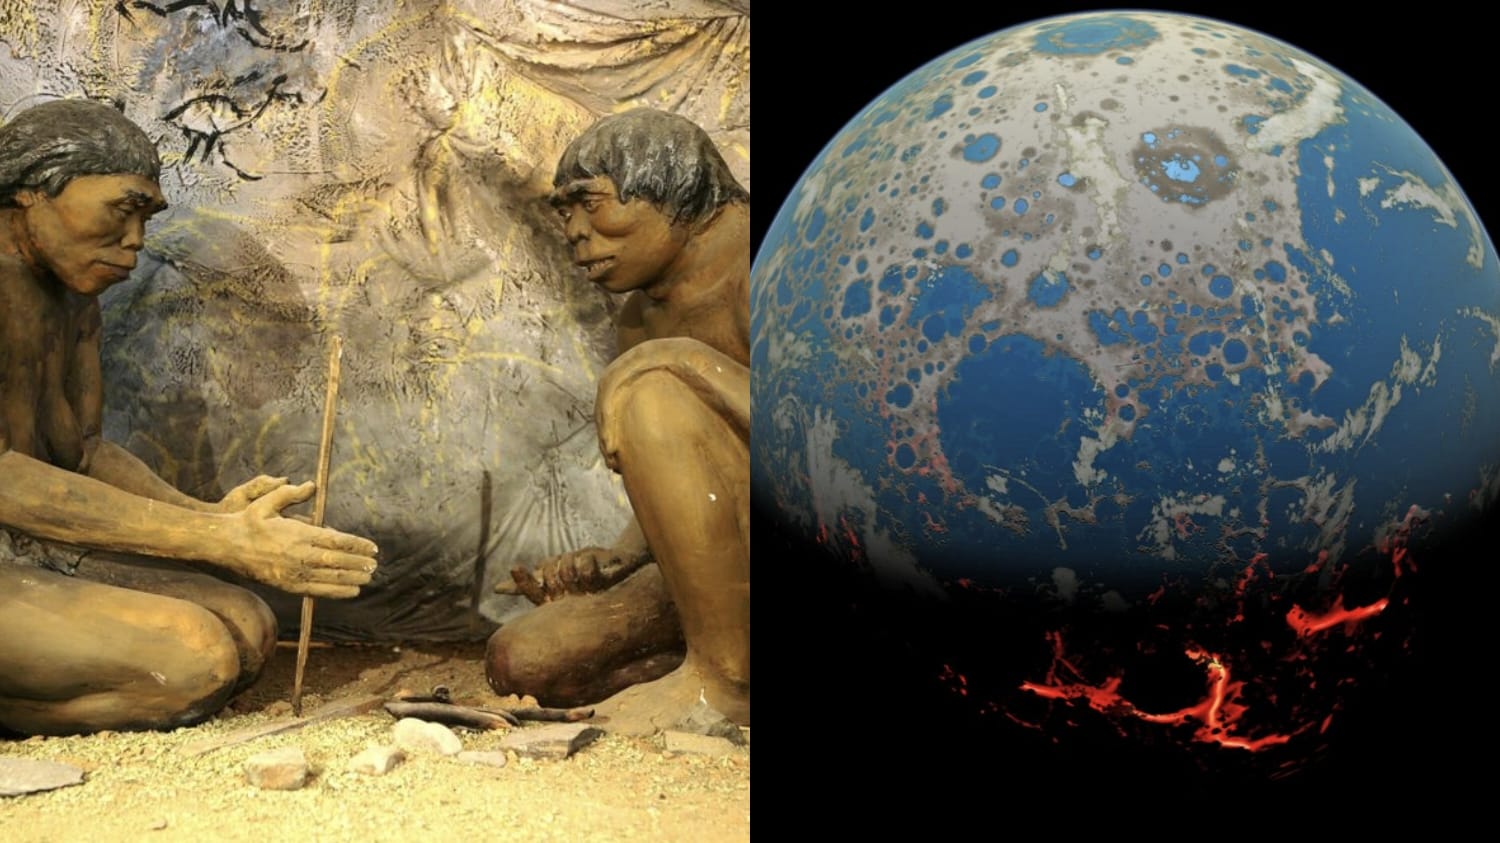 Sejarah Panjang dan Evolusi Kehidupan Hingga Kemunculan Manusia